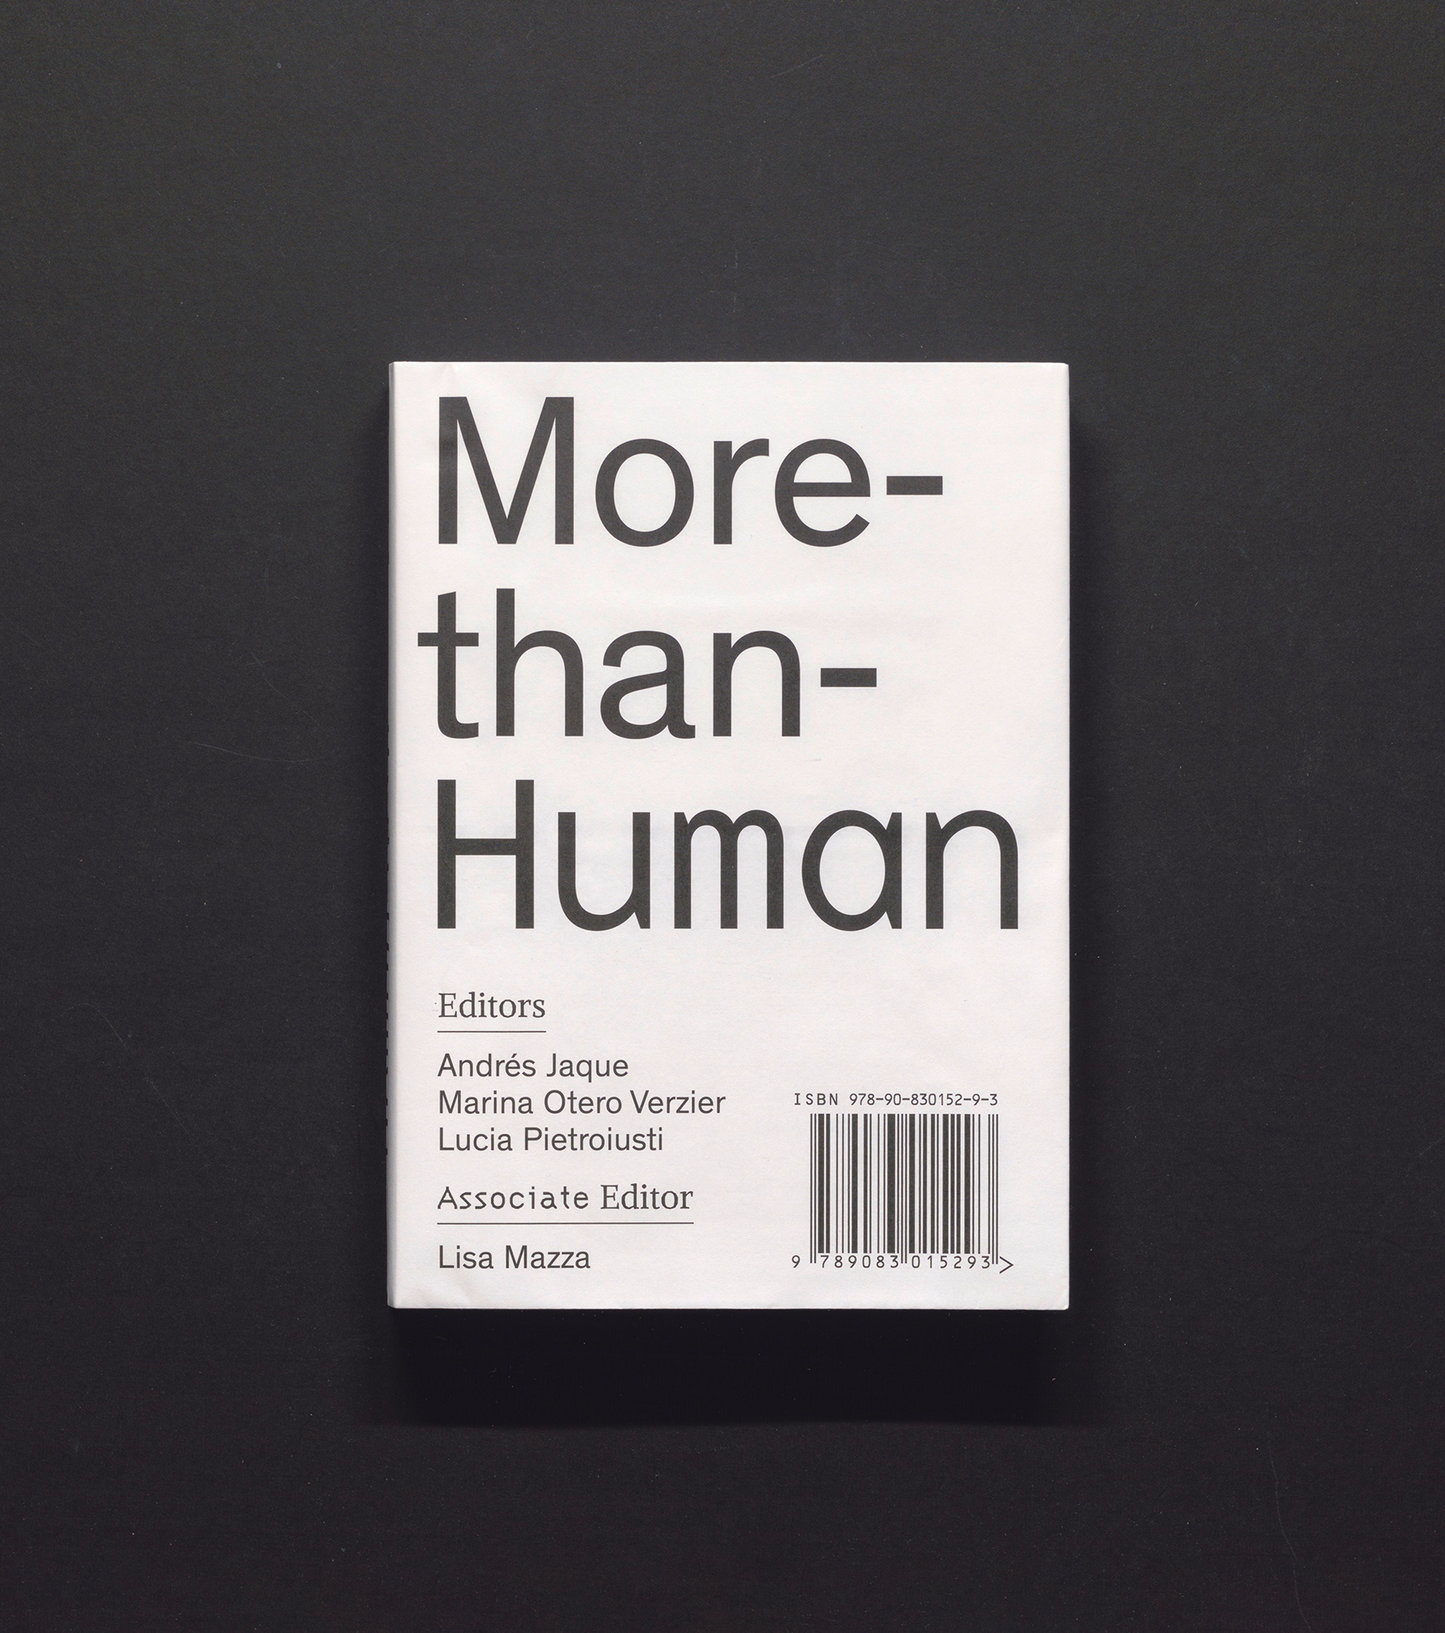 More than Human